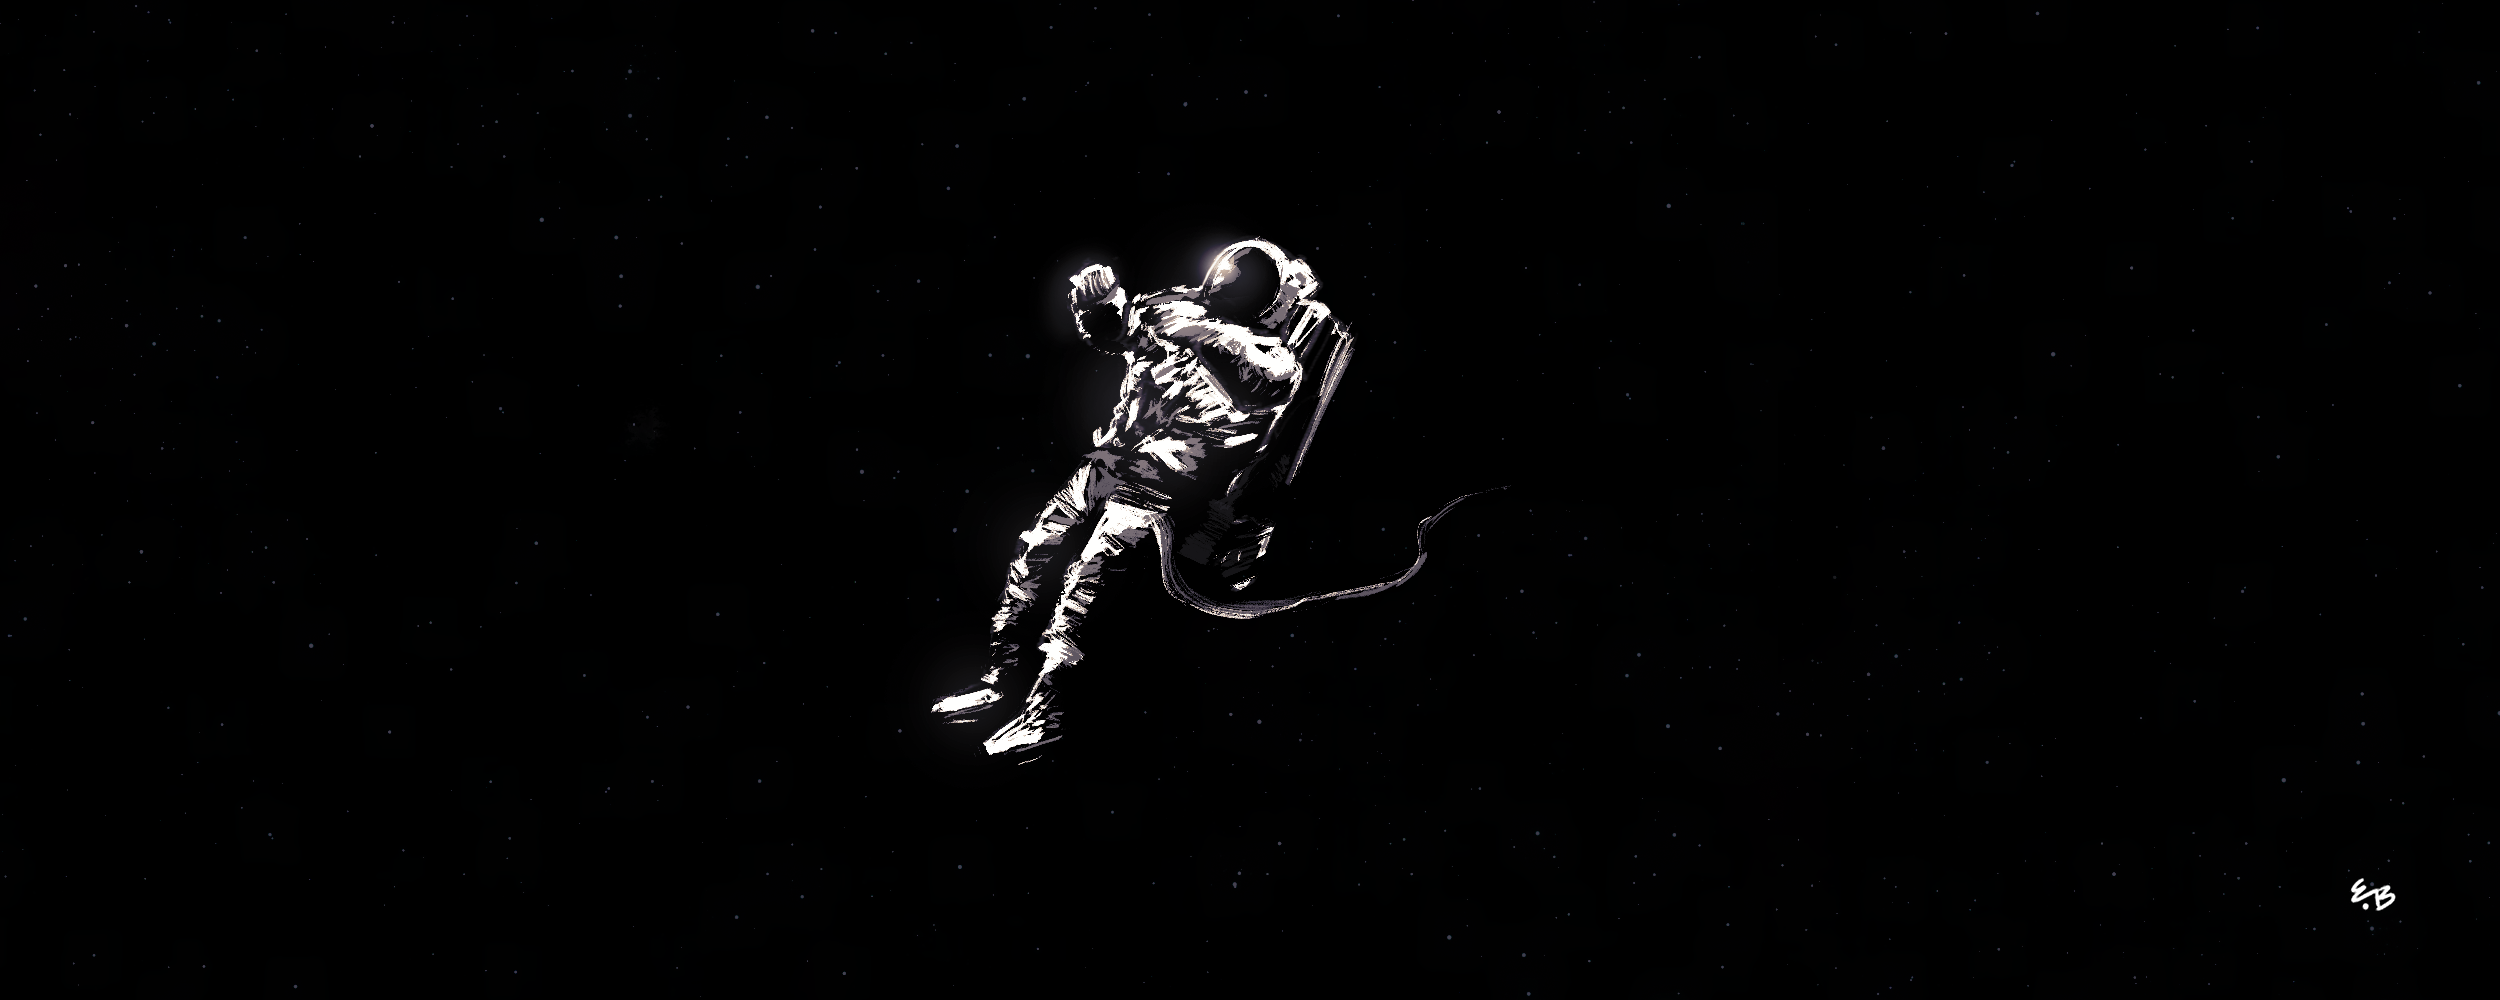 Astronaut in Space Alone by erkanbahadir23 on DeviantArt